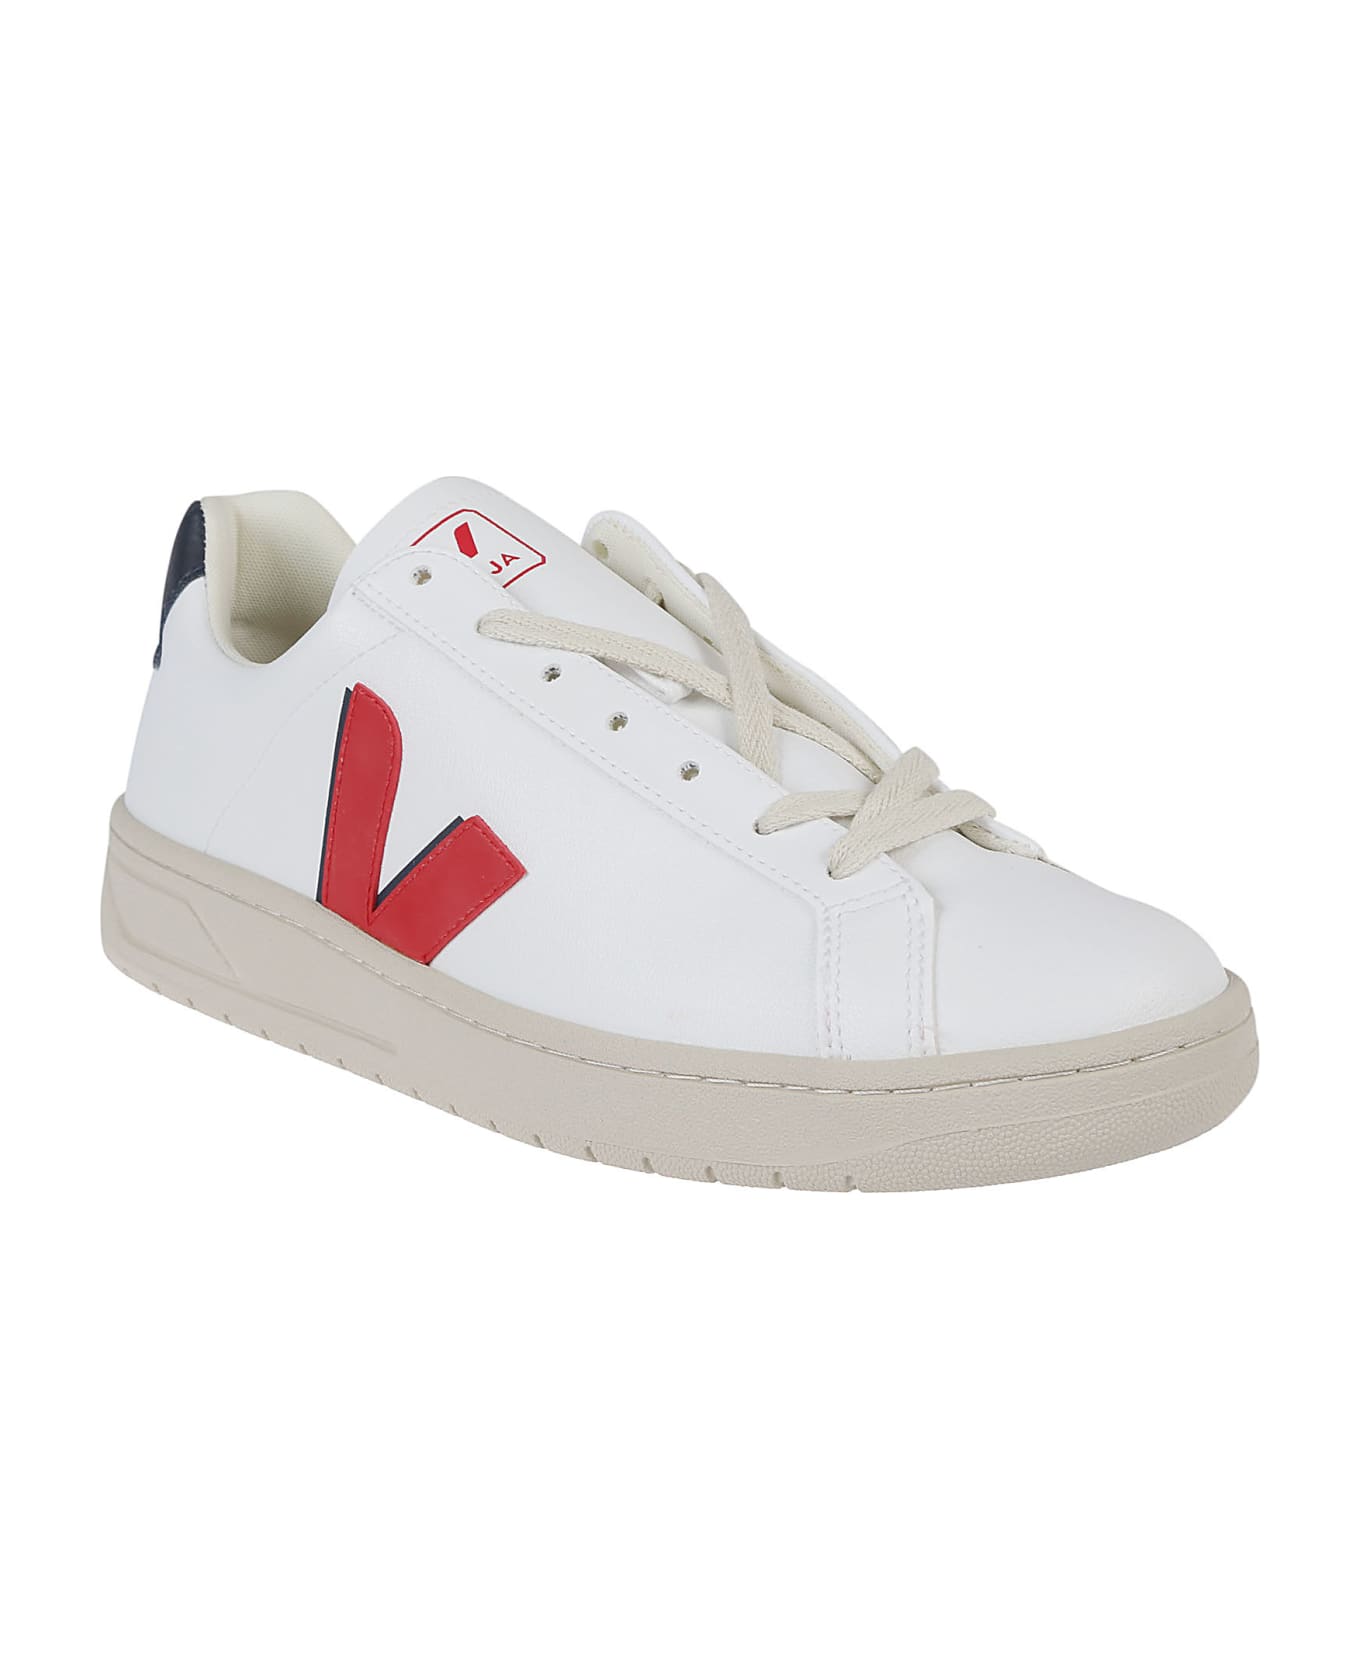 Veja Urca Sneakers - White/pekin/nautico